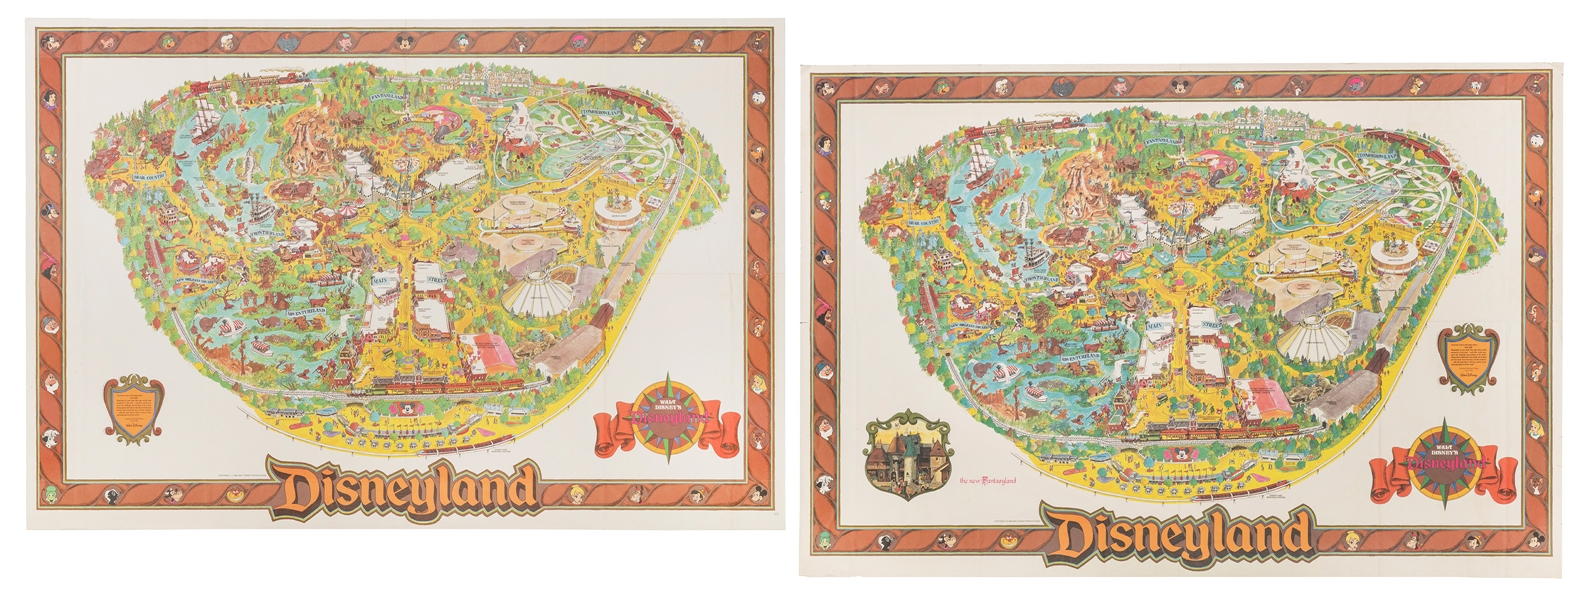  Disneyland Souvenir Maps. 1983/84. Walt Disney Productions....